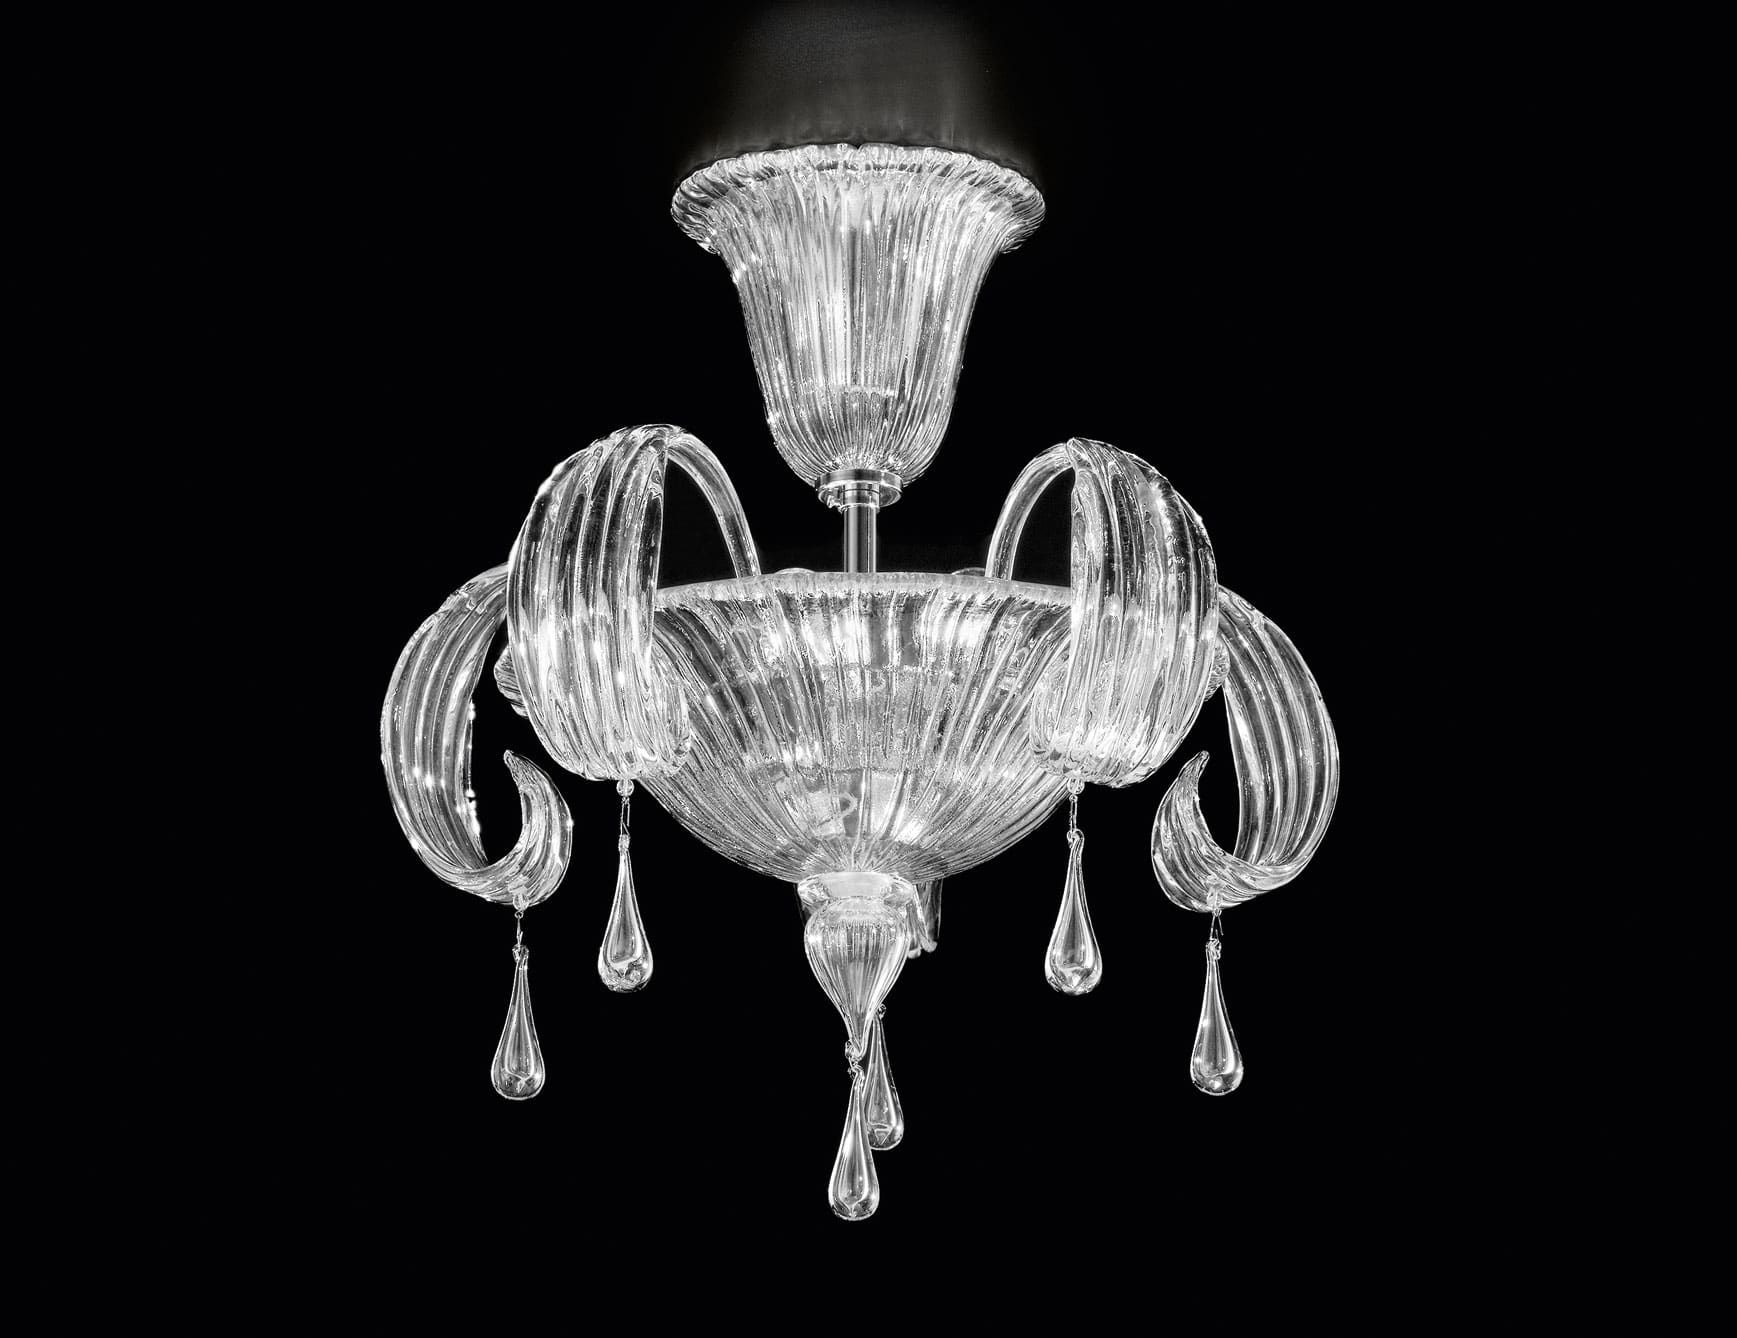 Molin modern Italian chandelier with clear glass